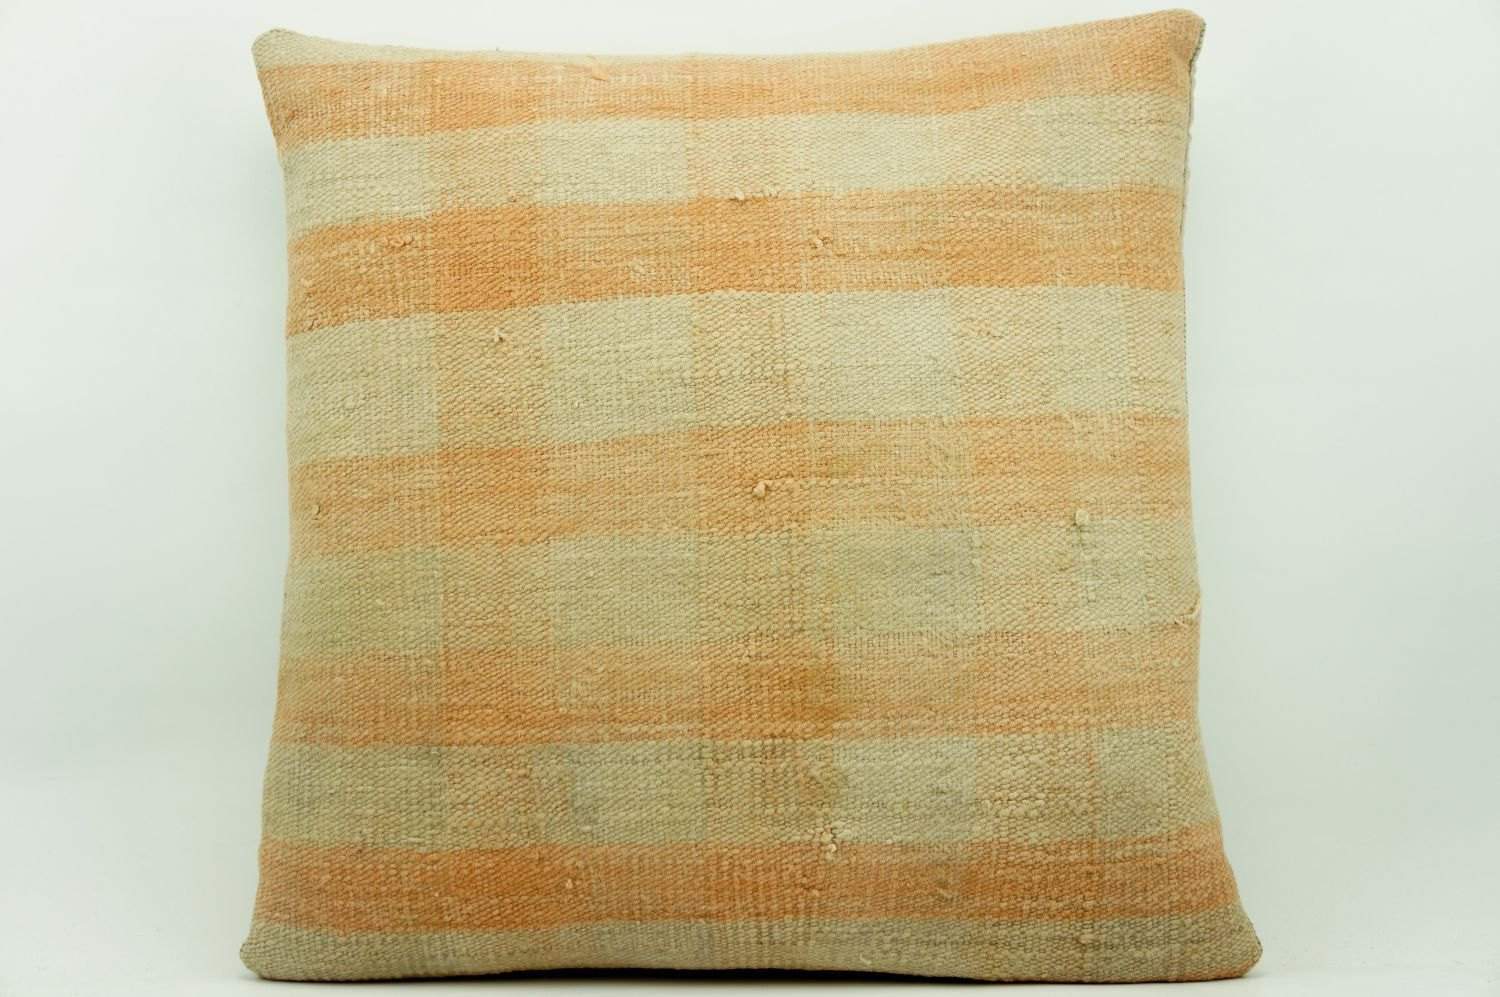 16x16 Vintage Hand Woven Kilim Pillow 946 pastel plaid pinkish greenish sham cushion pillow cover